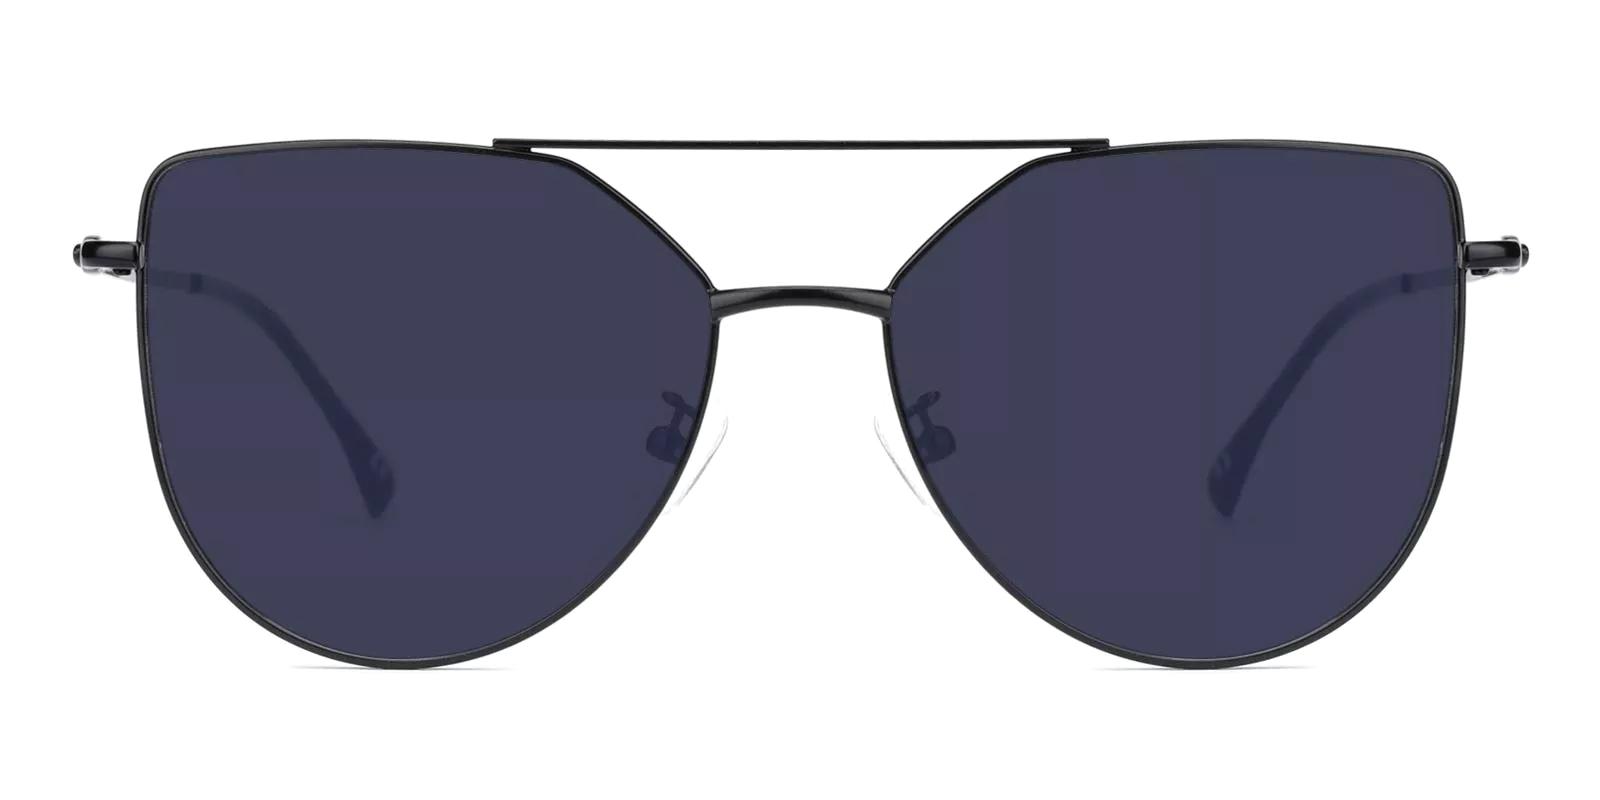 Shotier Black Metal NosePads , Sunglasses Frames from ABBE Glasses